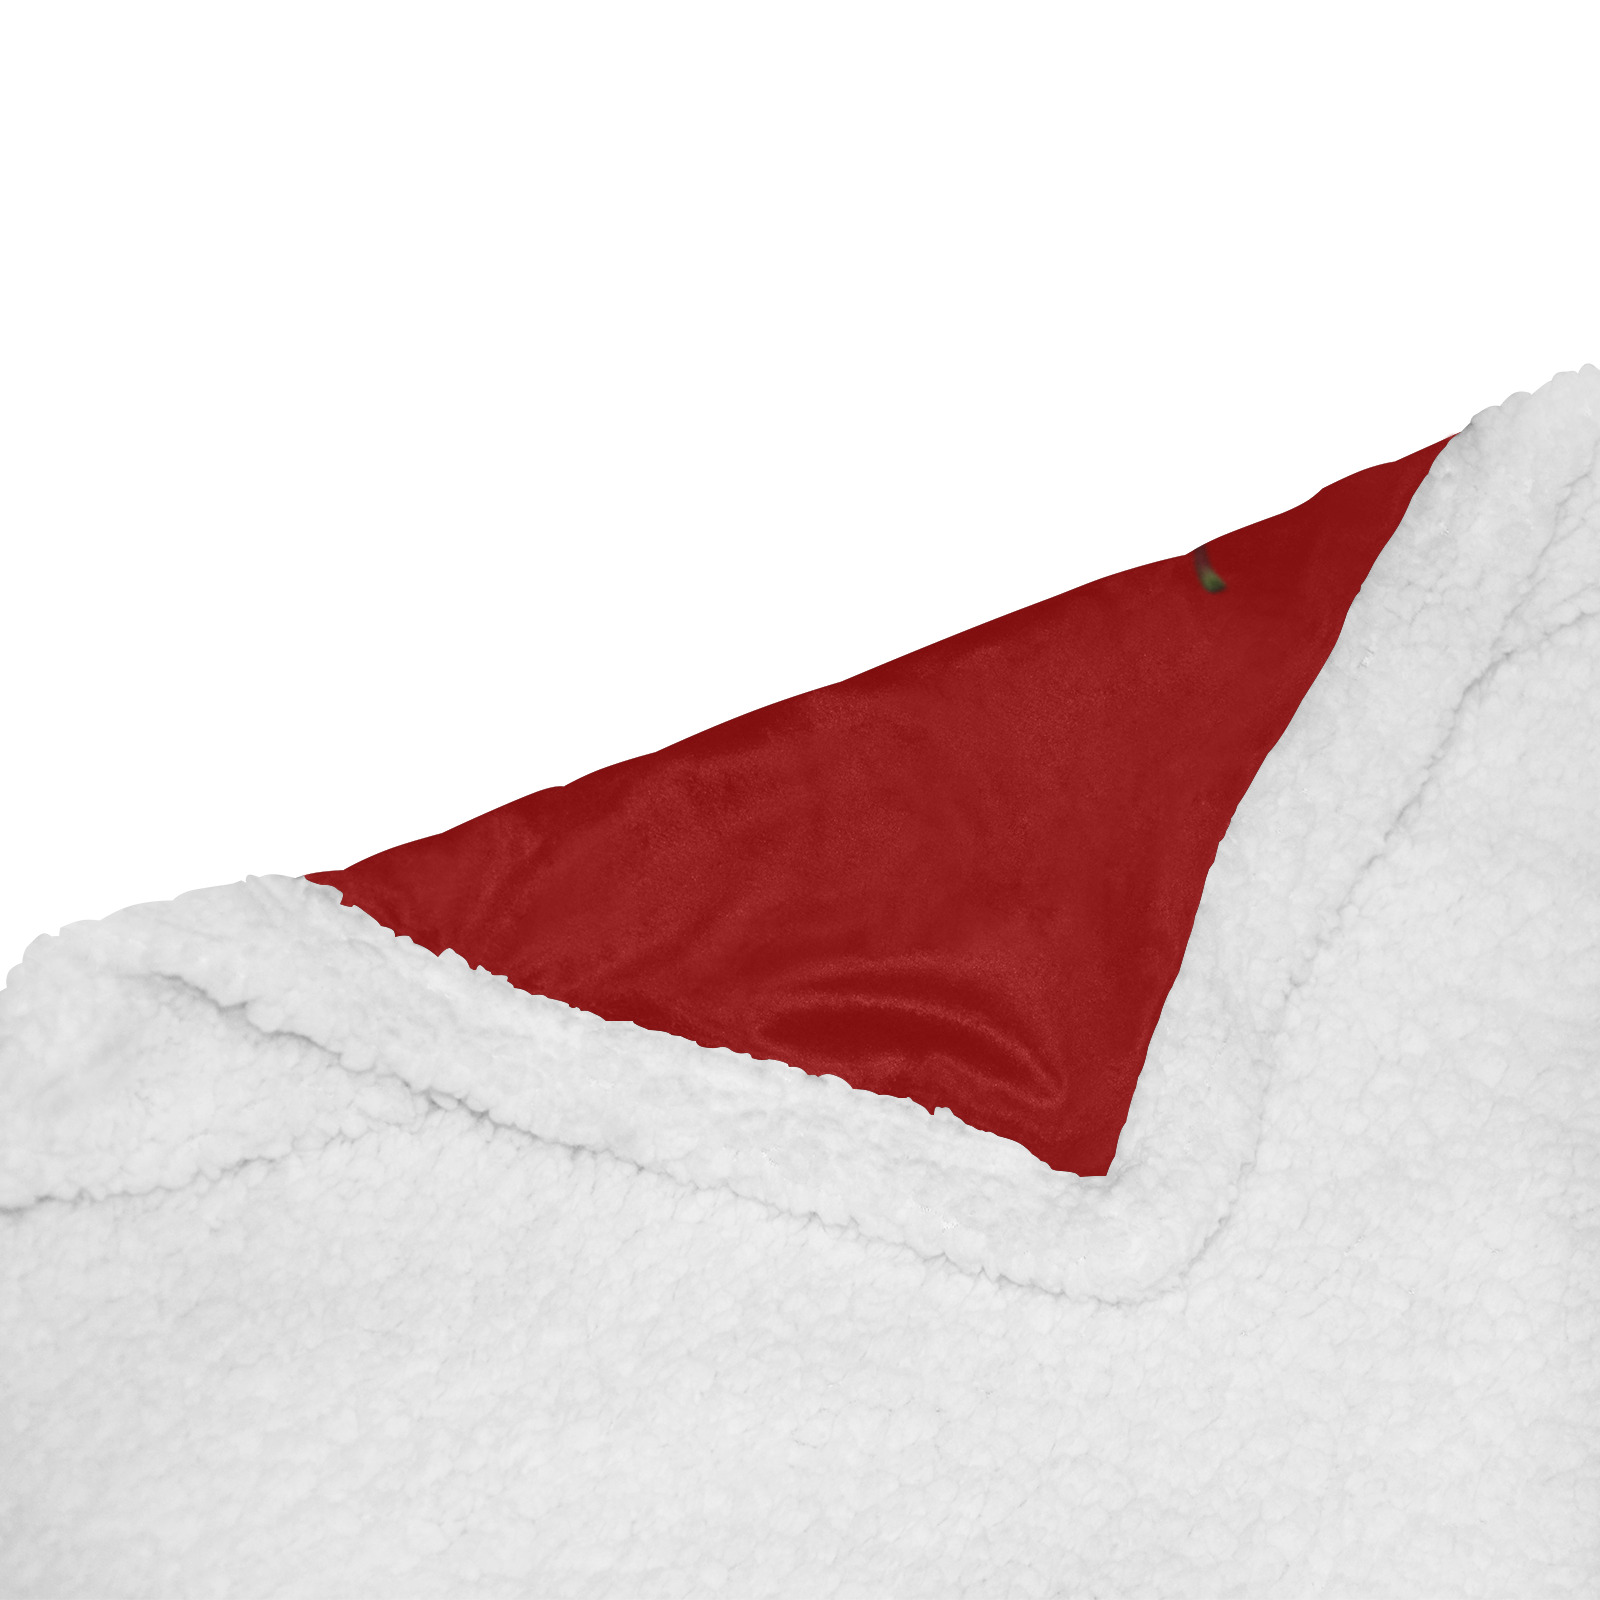 Canada Maple Leaf Double Layer Short Plush Blanket 50"x60"